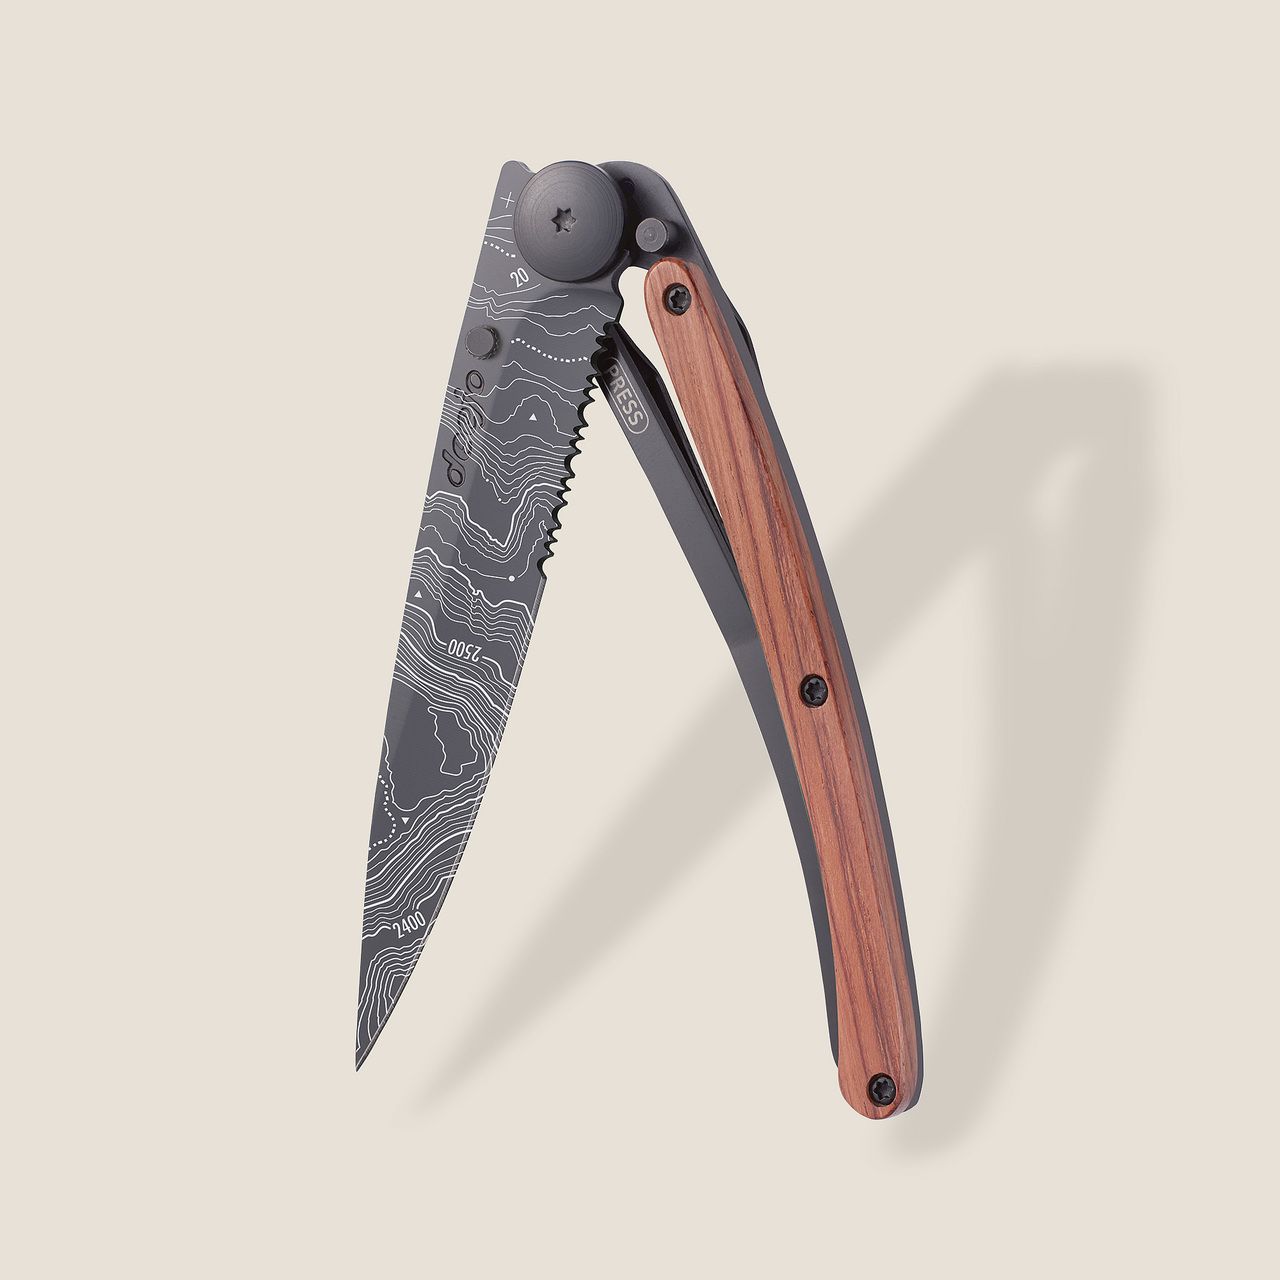 Deejo Serrated 37g, Coral wood / Topography - 37 GR (Standard) - POCKET  KNIVES